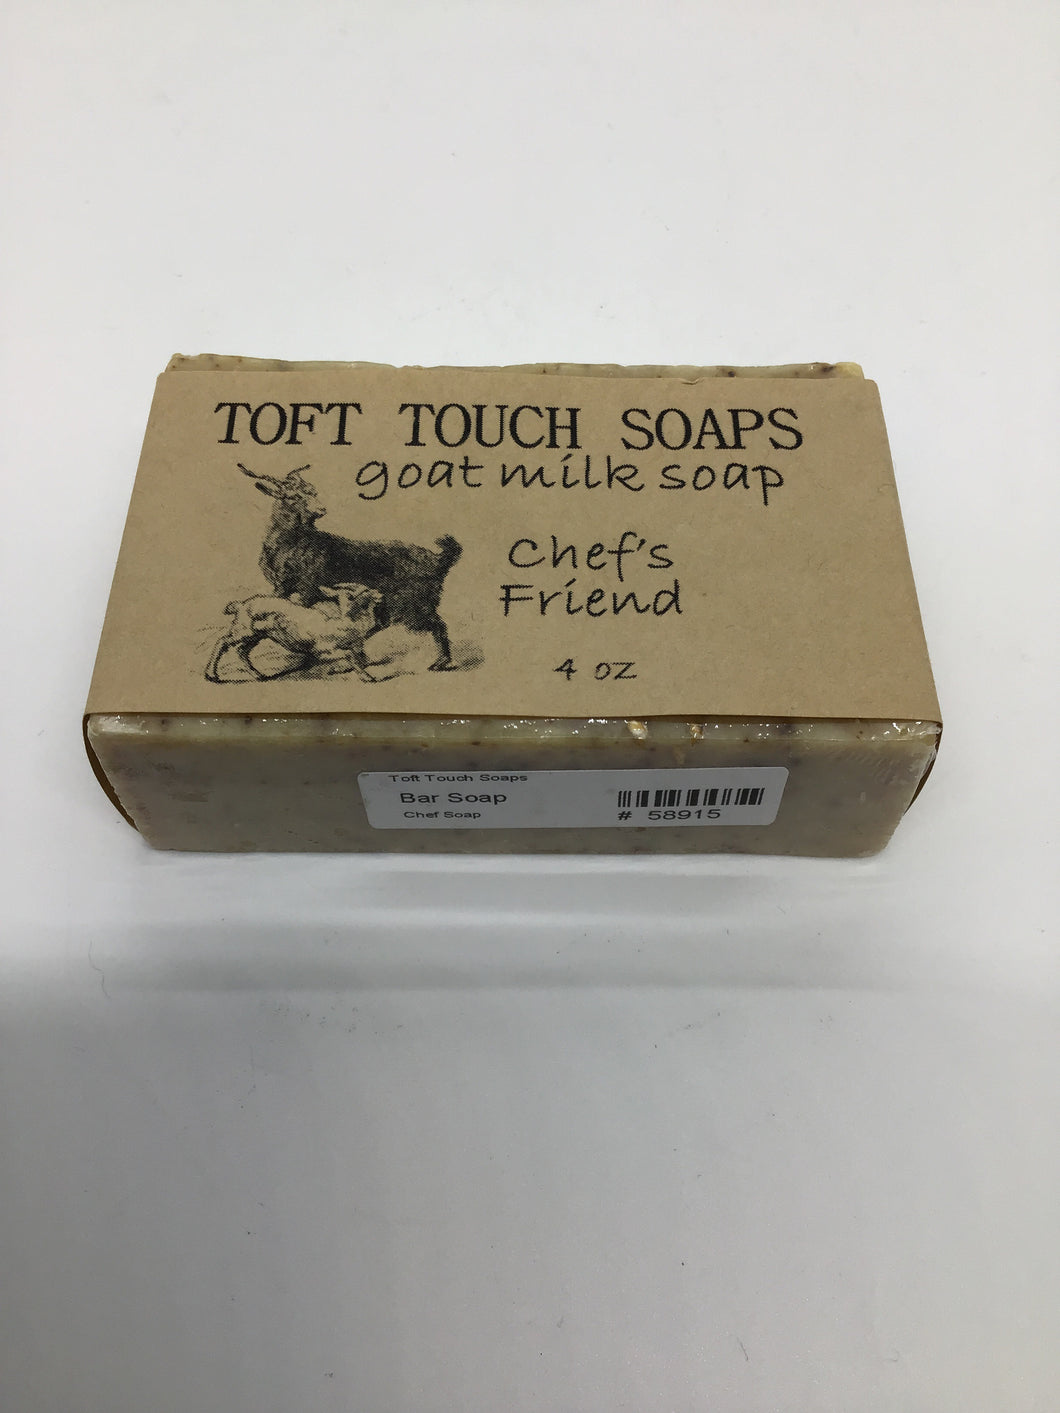 Chef’s Friends Goat Milk Soap